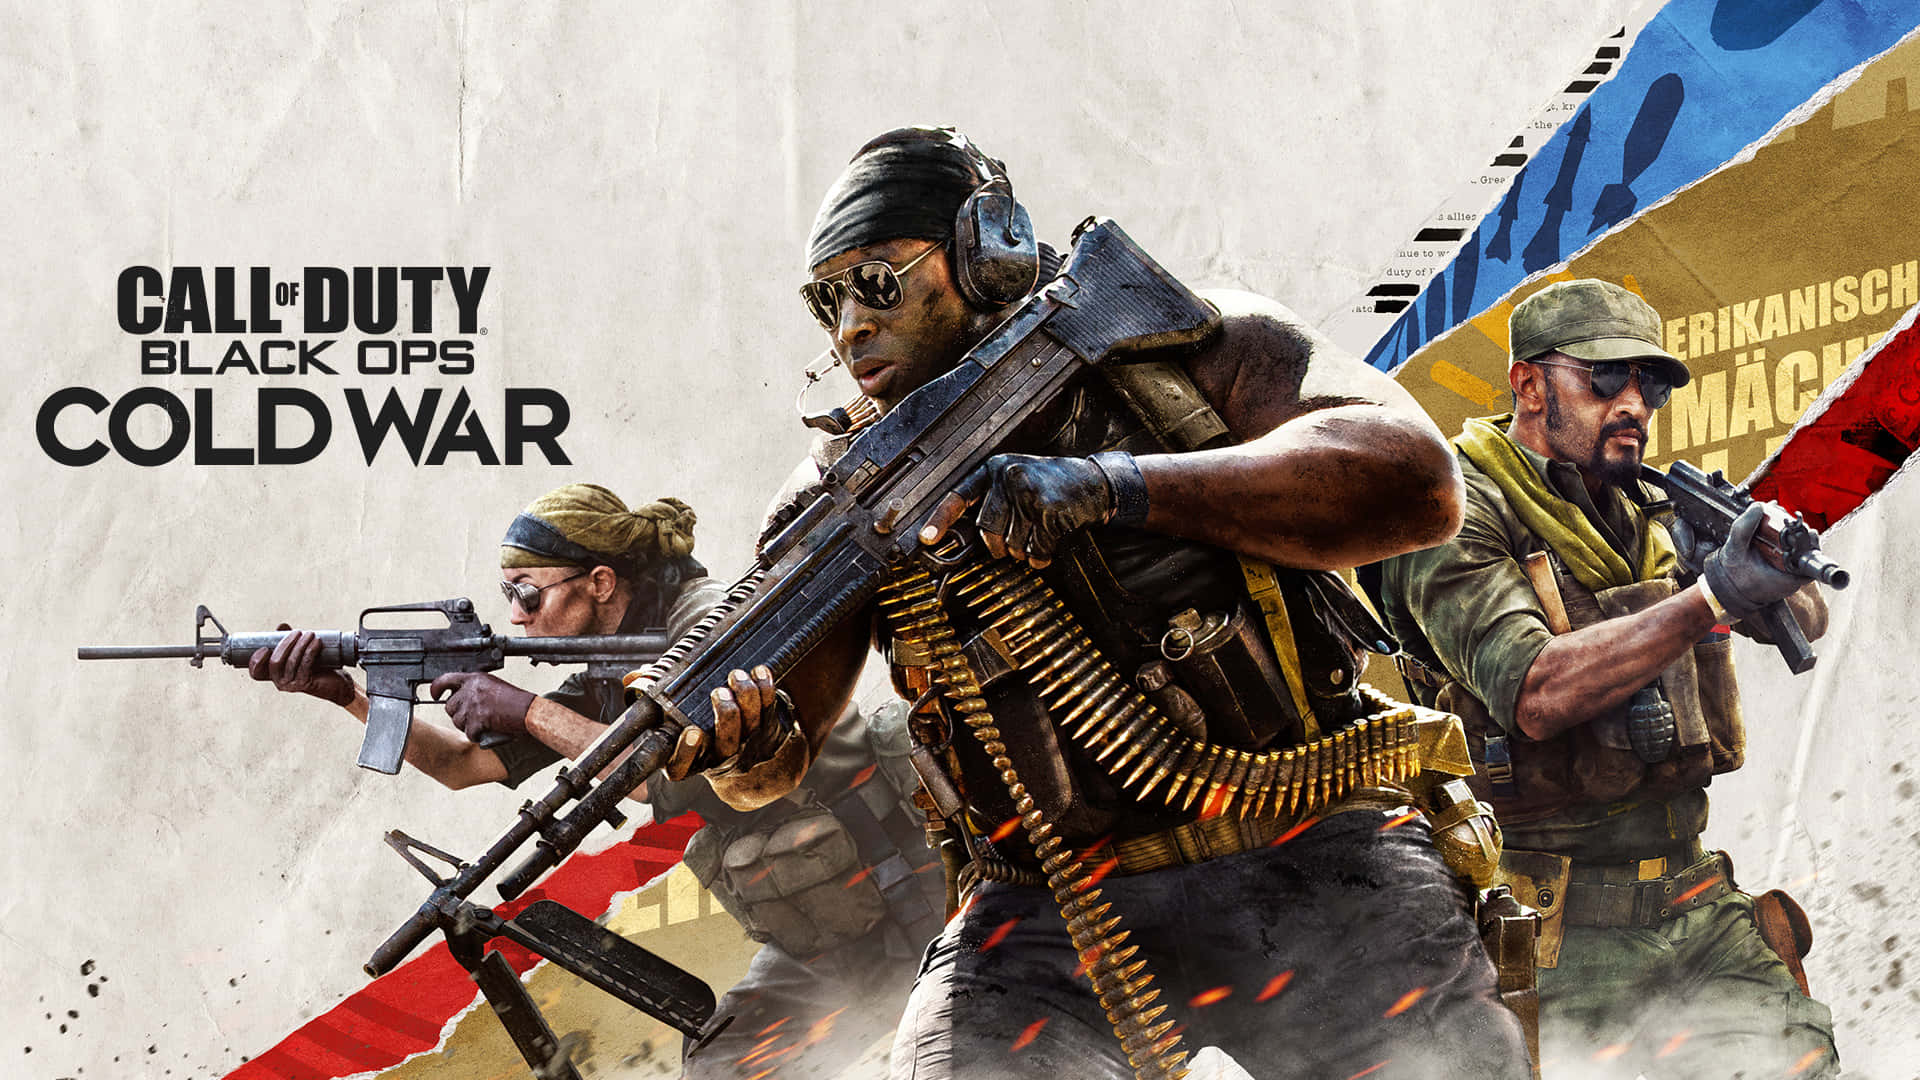 Callof Duty Black Ops Cold War - Call Of Duty Black Ops Kalla Kriget